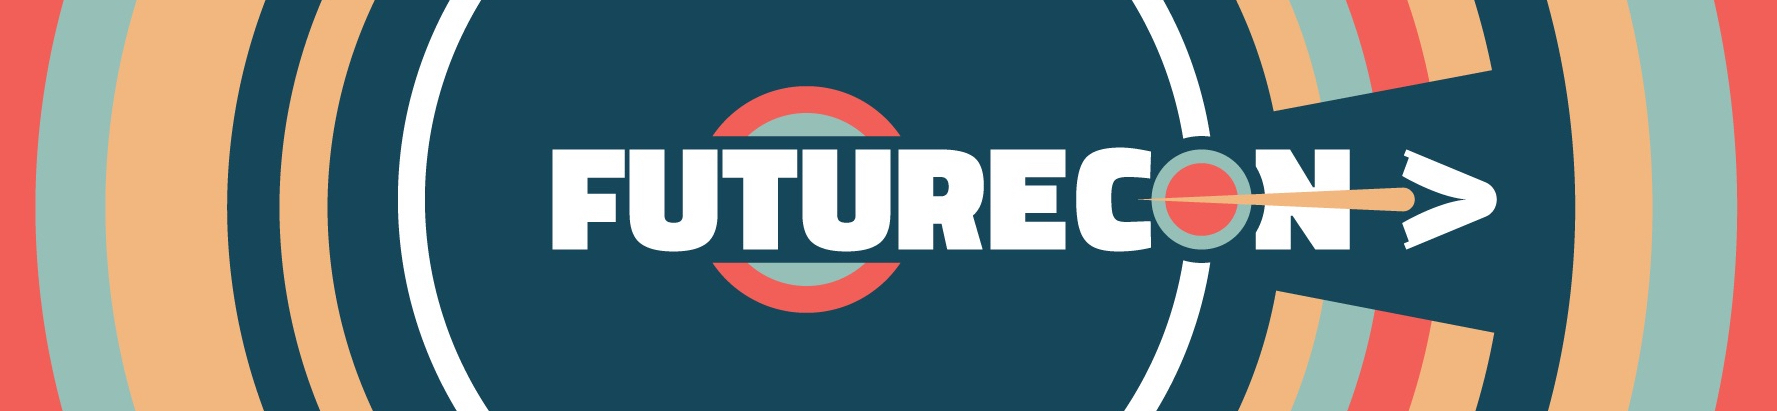 Futurecon logo